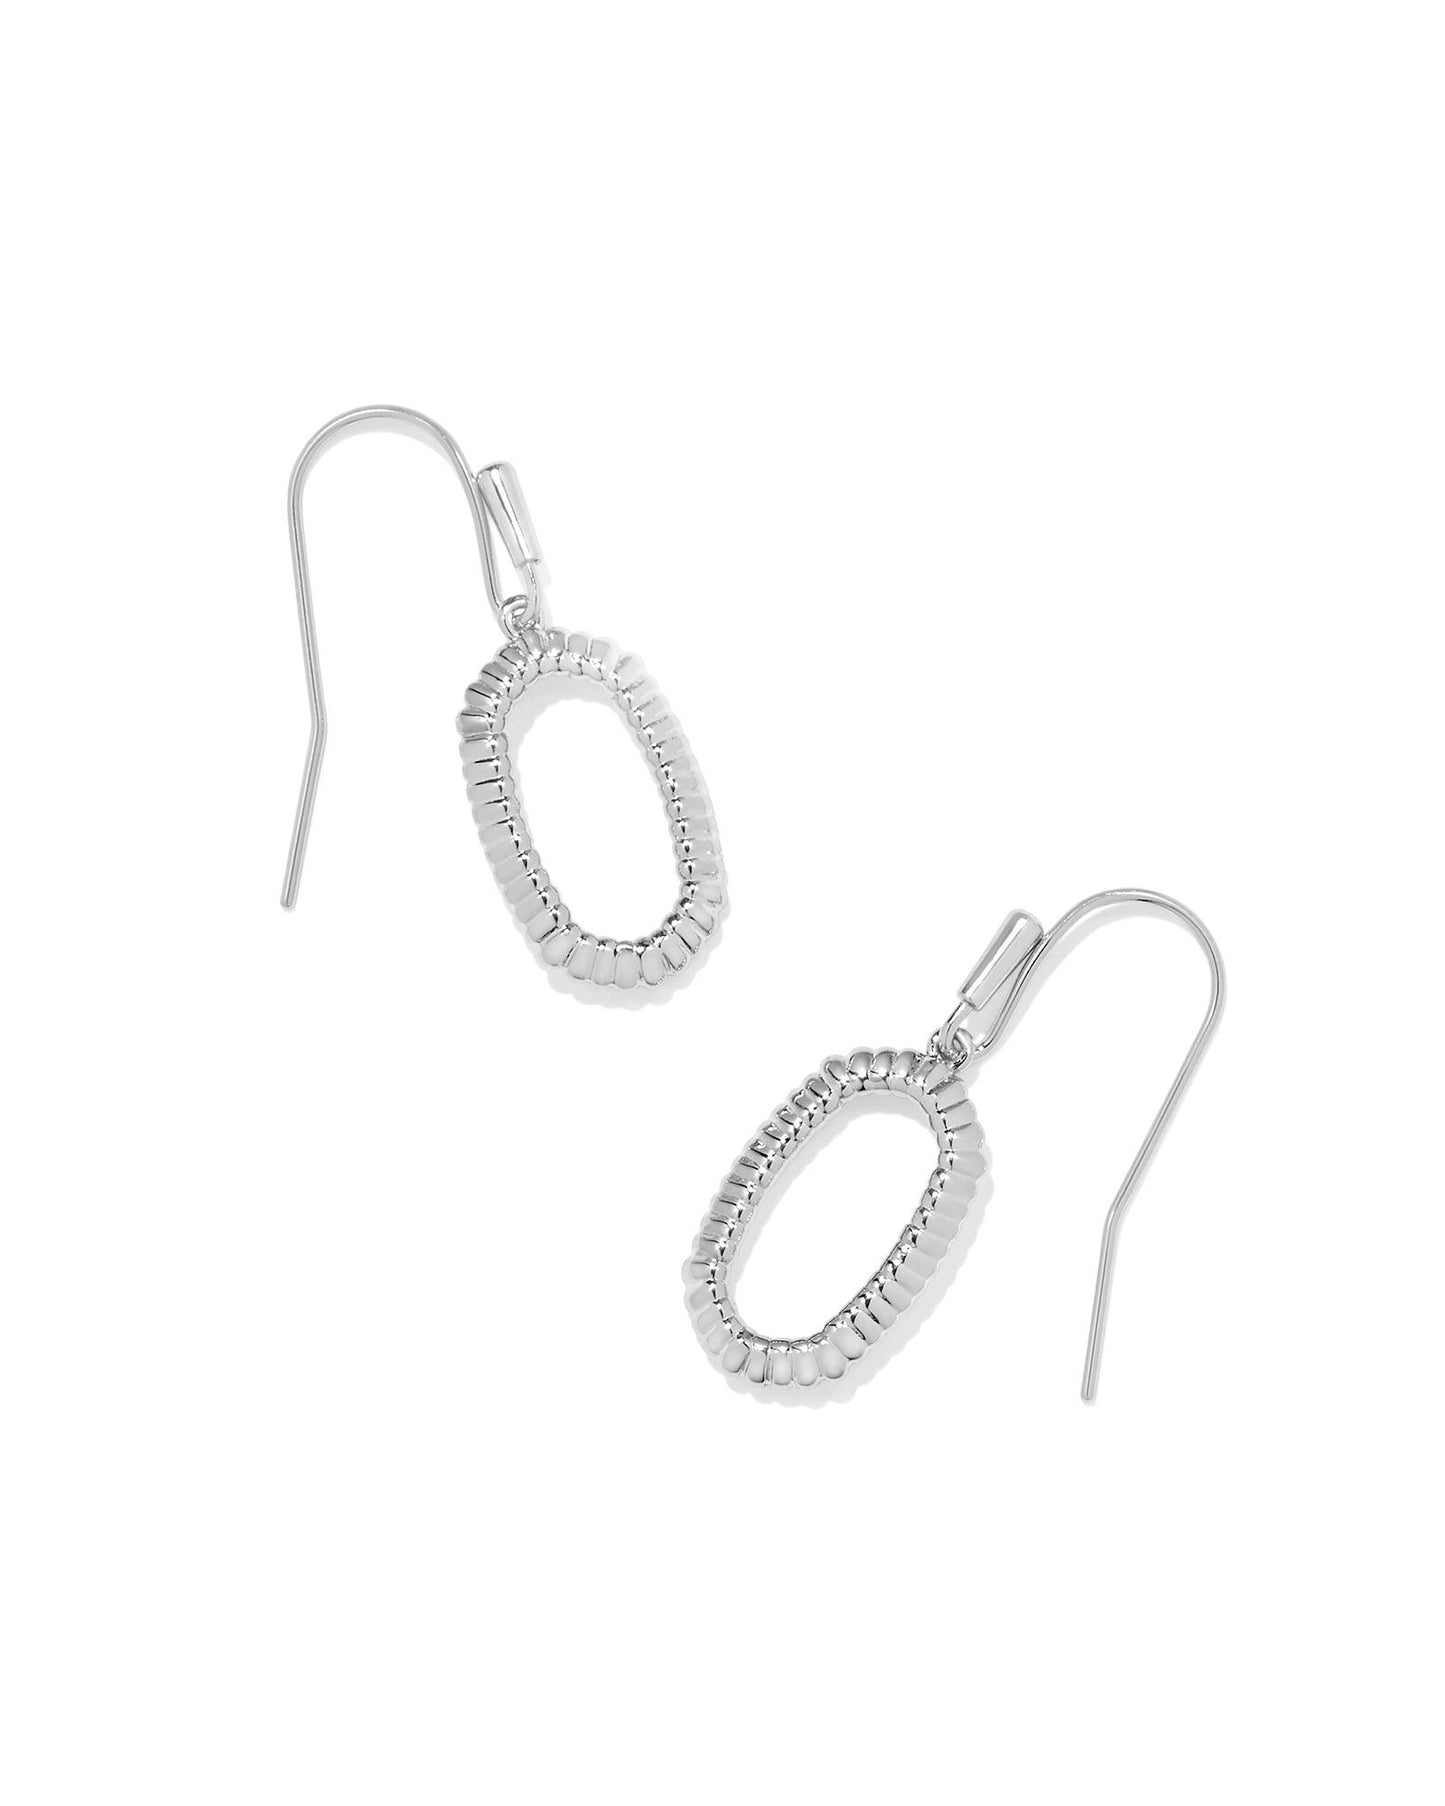 fishhook closure earrings with a open ridges shape design in rhodium 